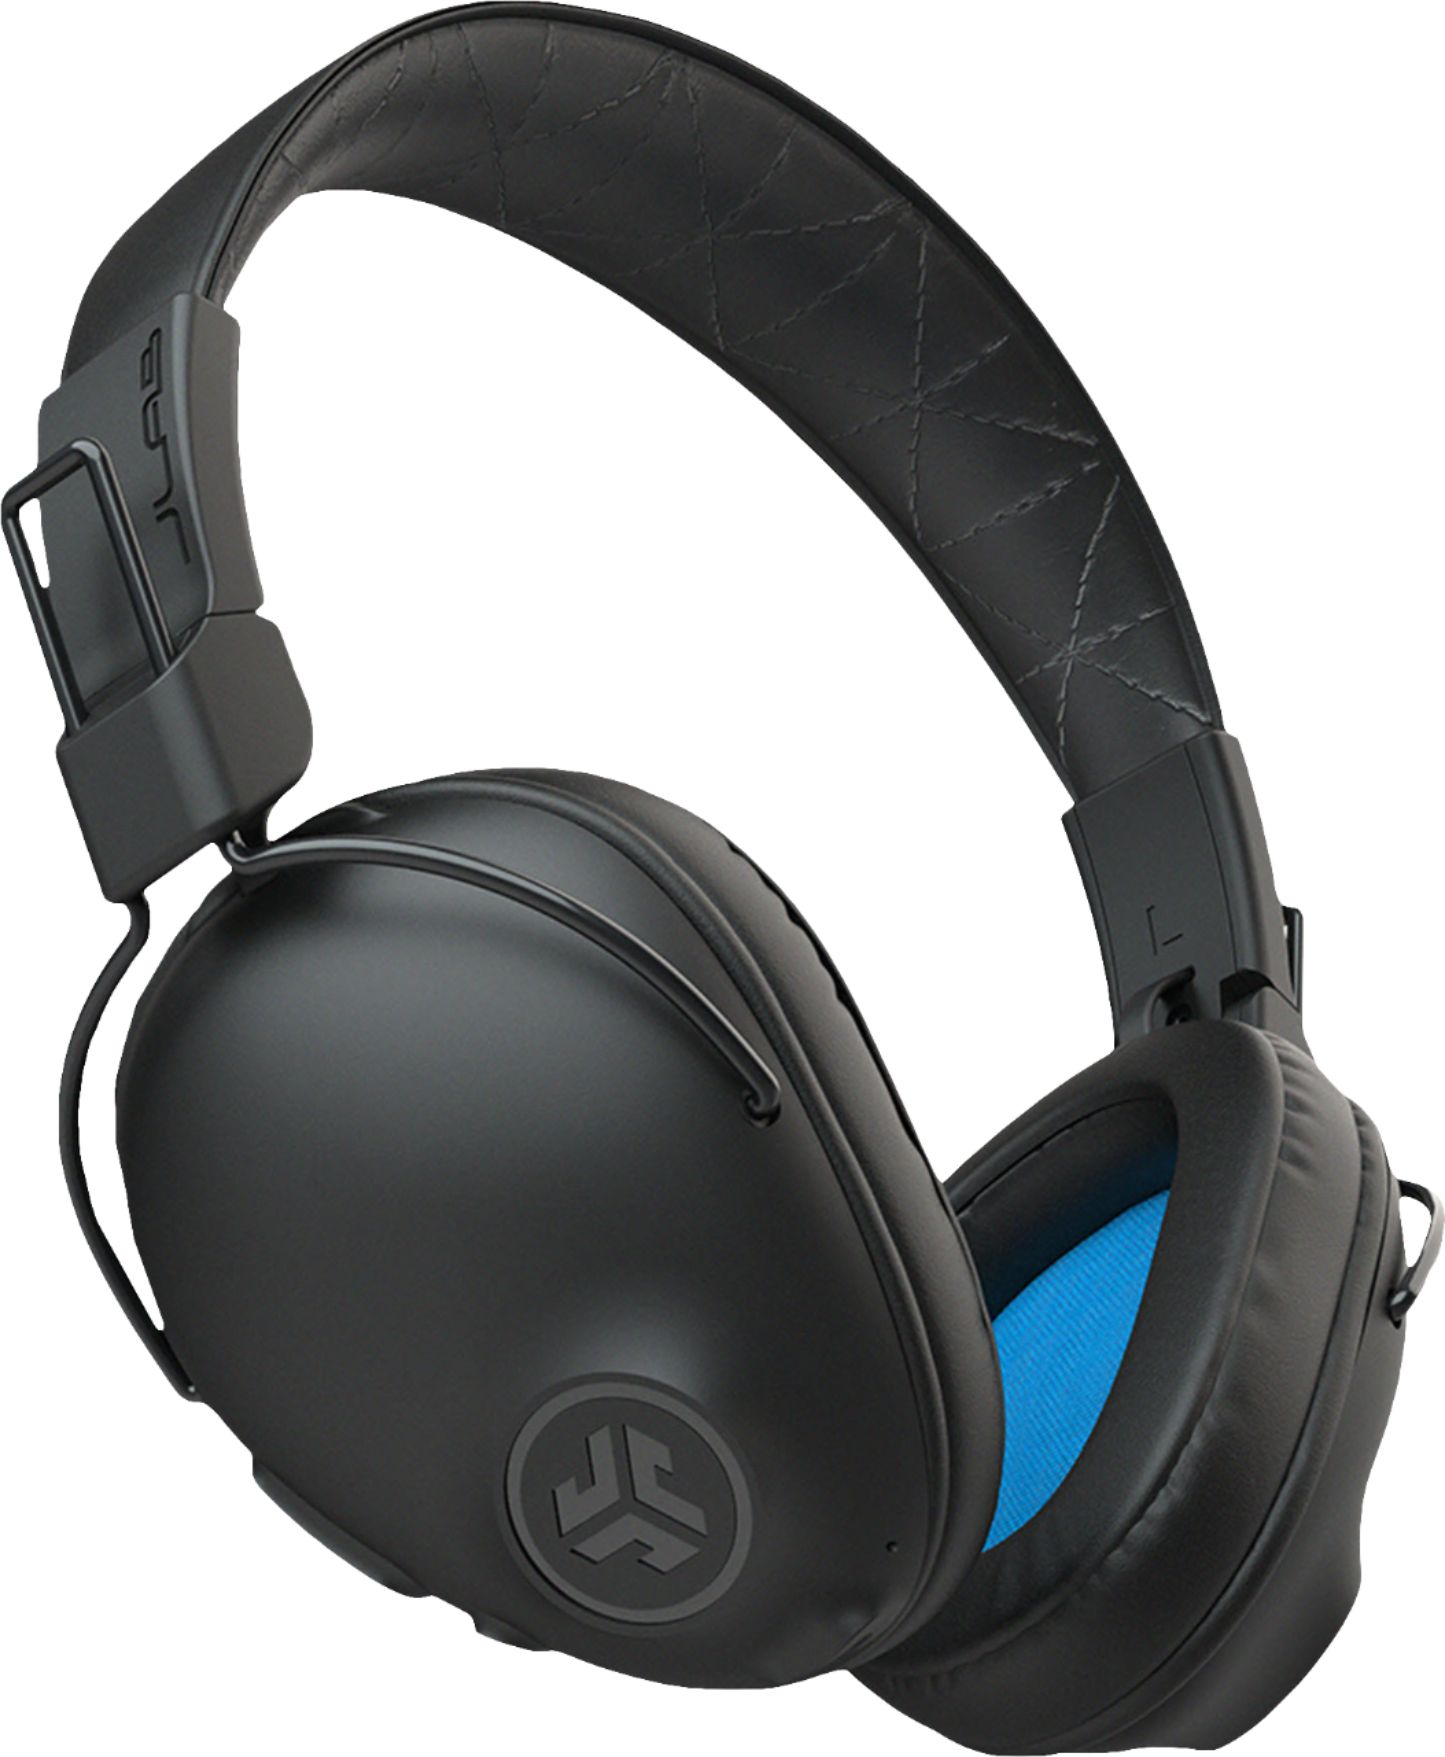 jlab studio wireless headphones ps4